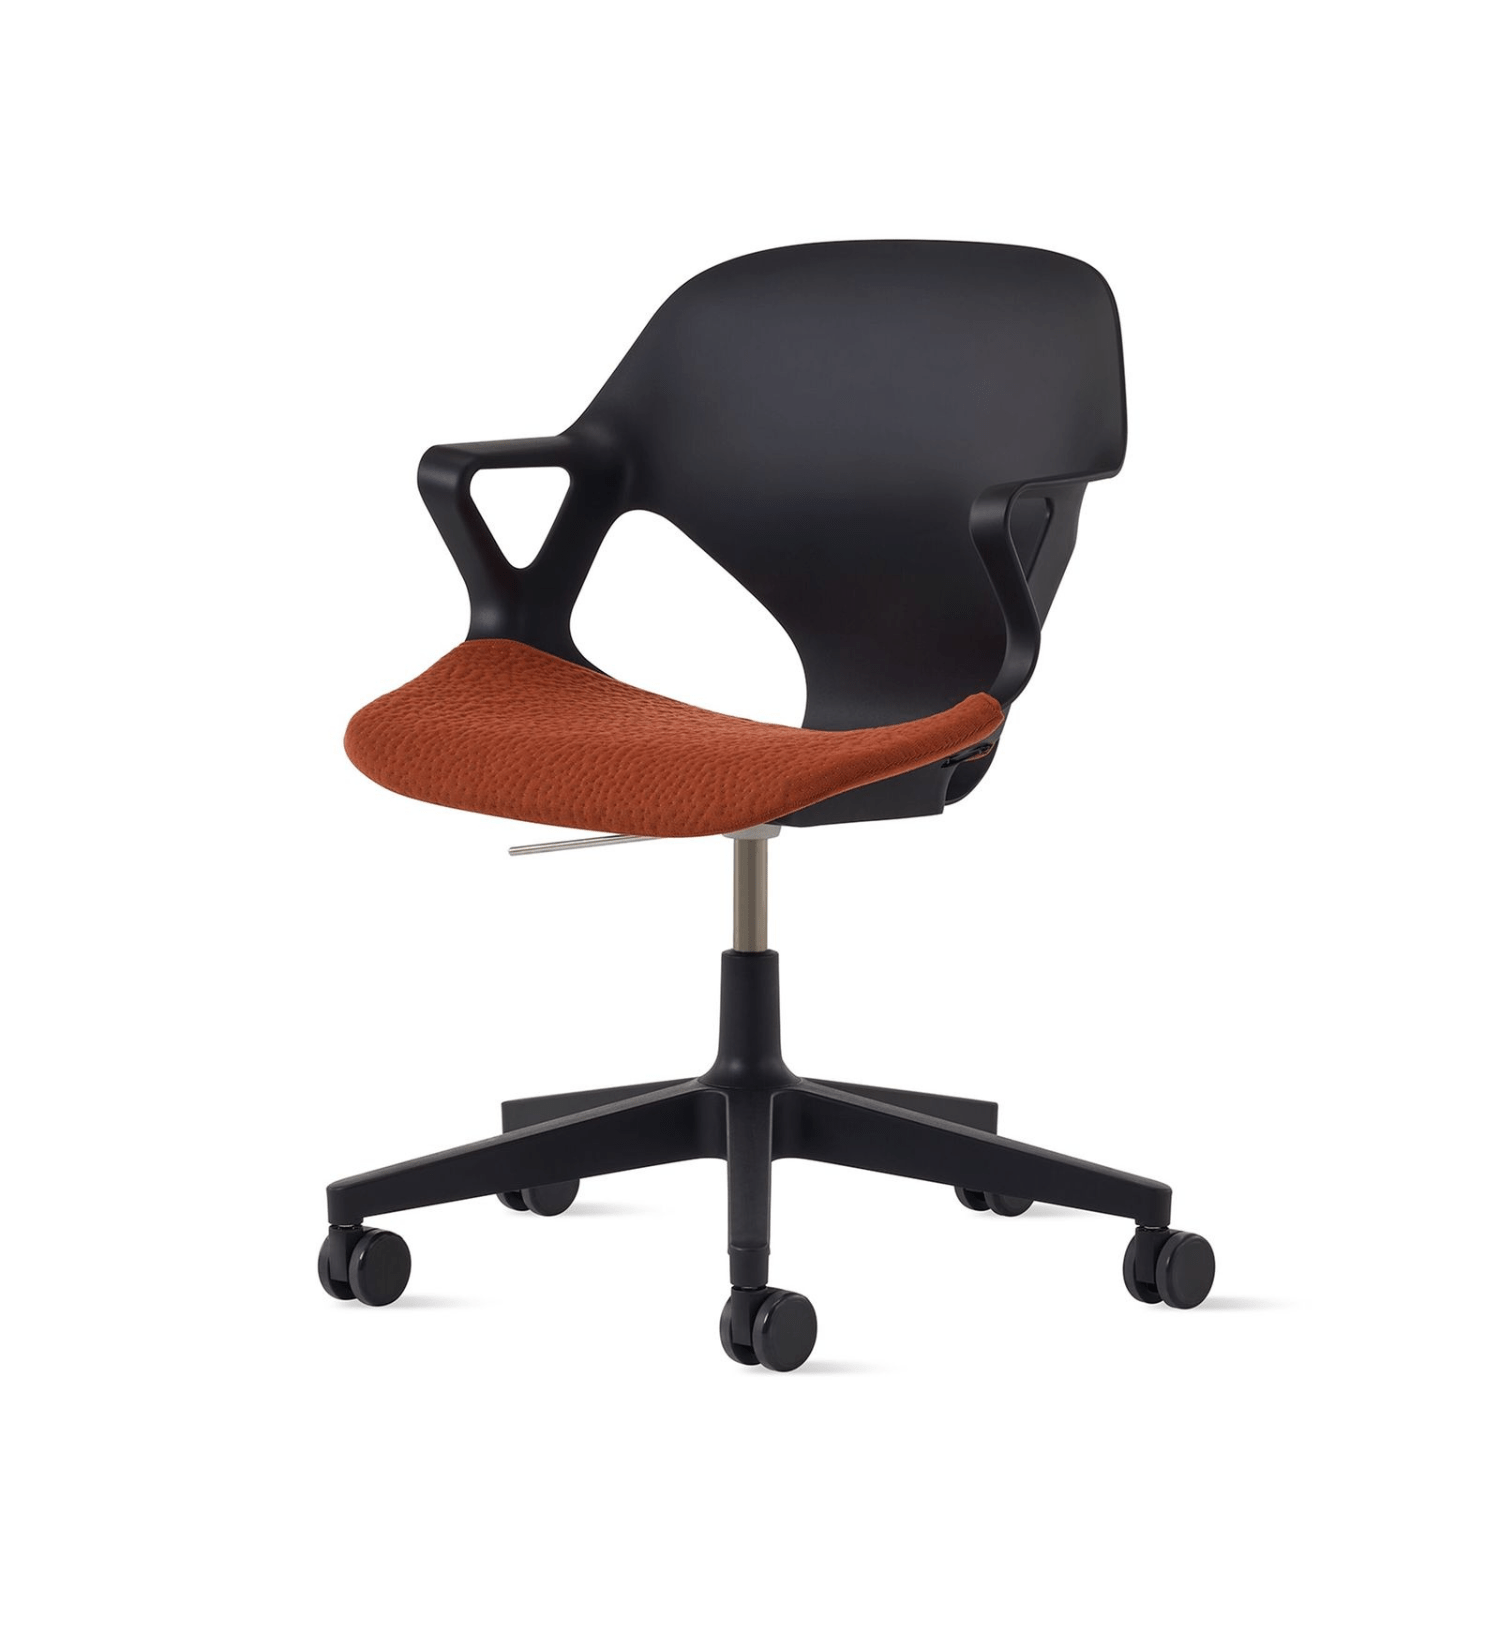 Krzesło biurowe Zeph marki Herman Miller